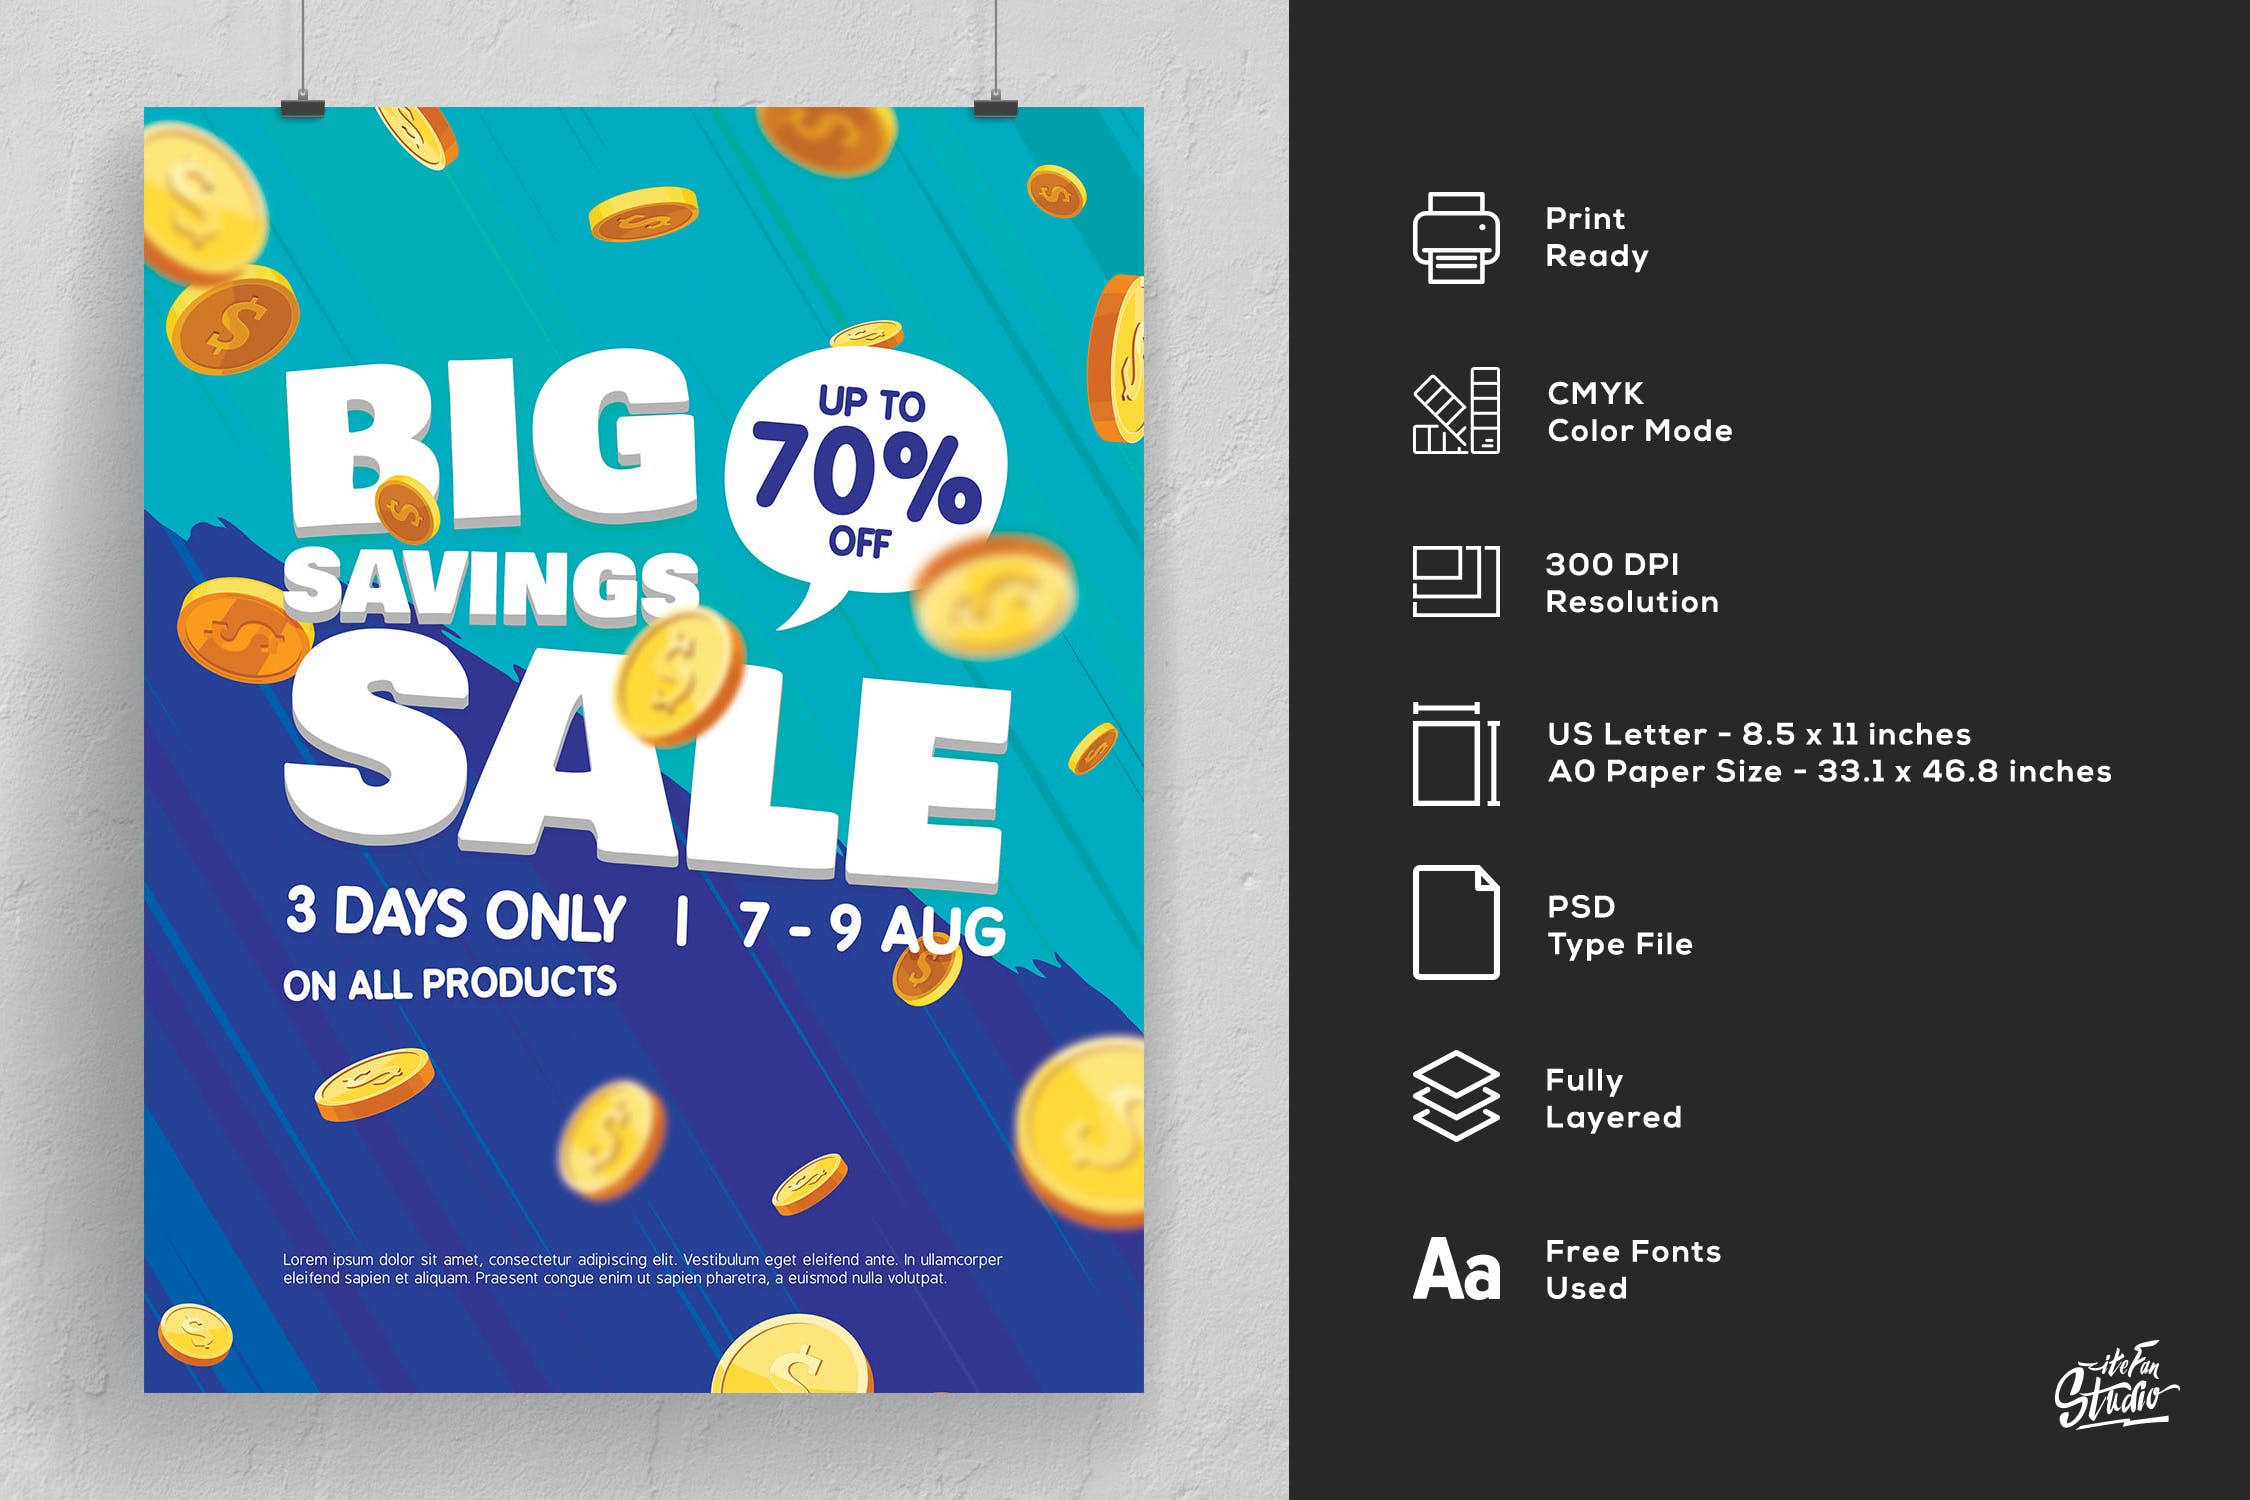 天降金币大型促销活动海报设计模板 Falling Coins Big Savings Sale Poster And Flyer插图(4)